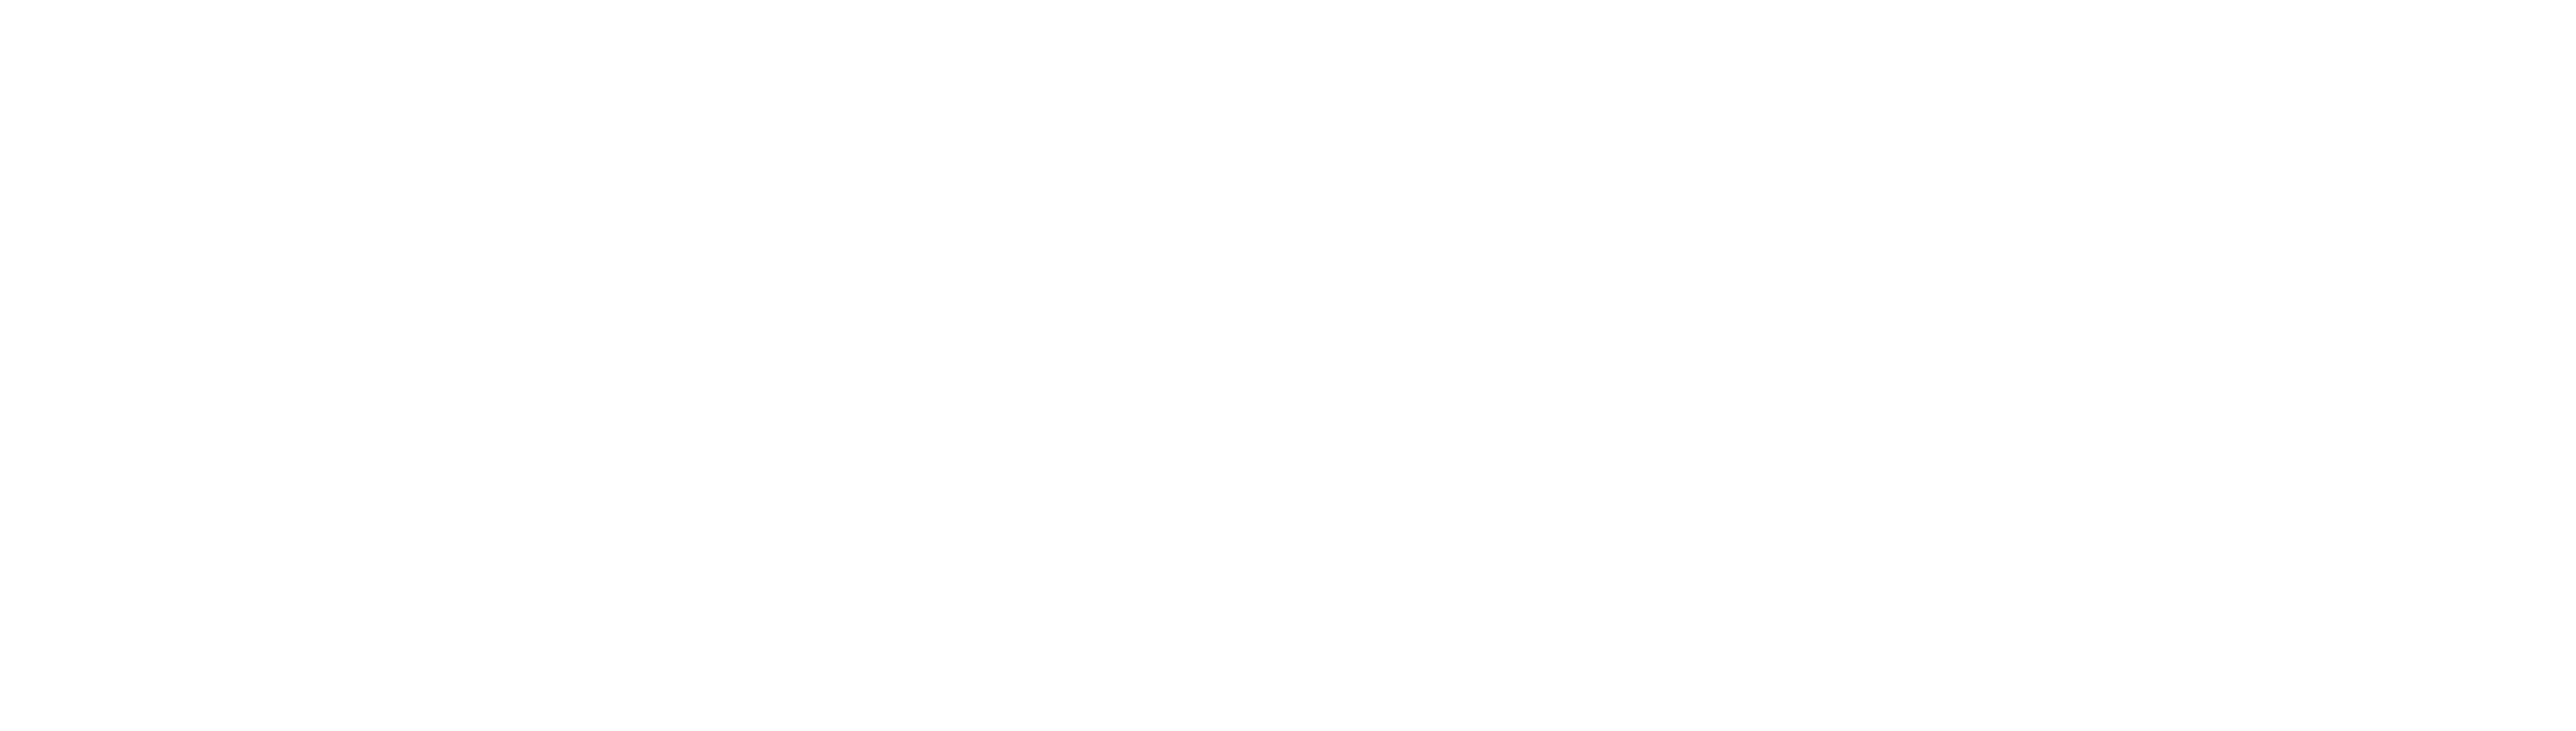 Newcastle University Logo white